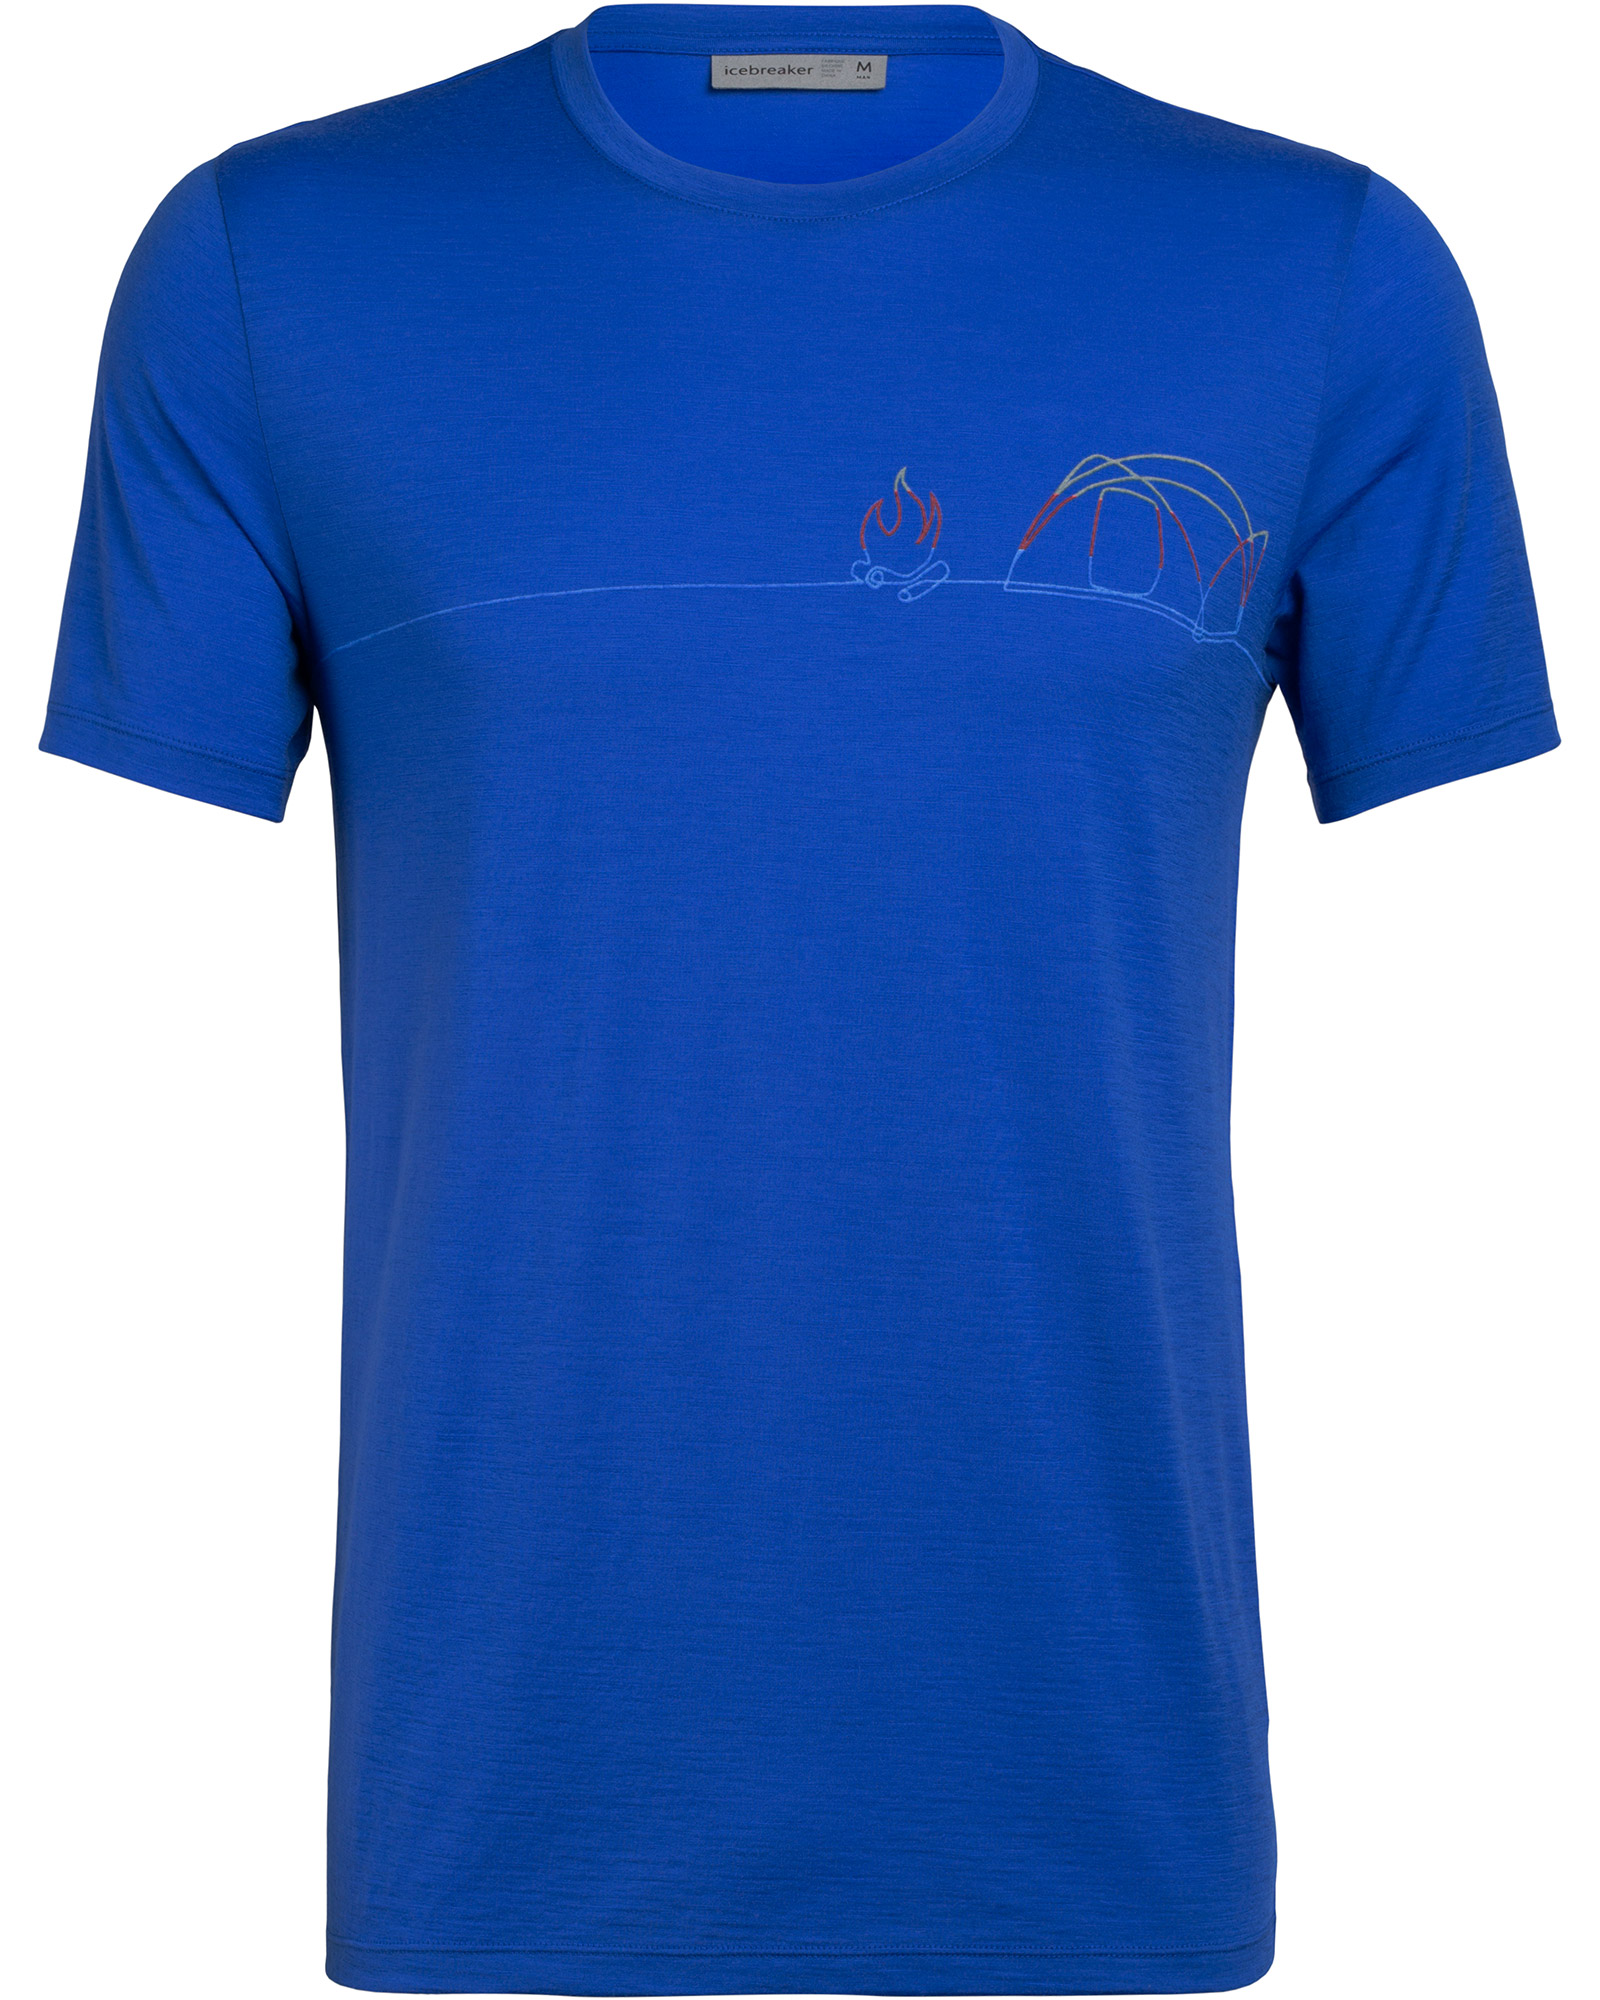 icebreaker Merino Tech Lite Graphic Men’s Crew T Shirt - Single Line Camp/Lapis Blue L